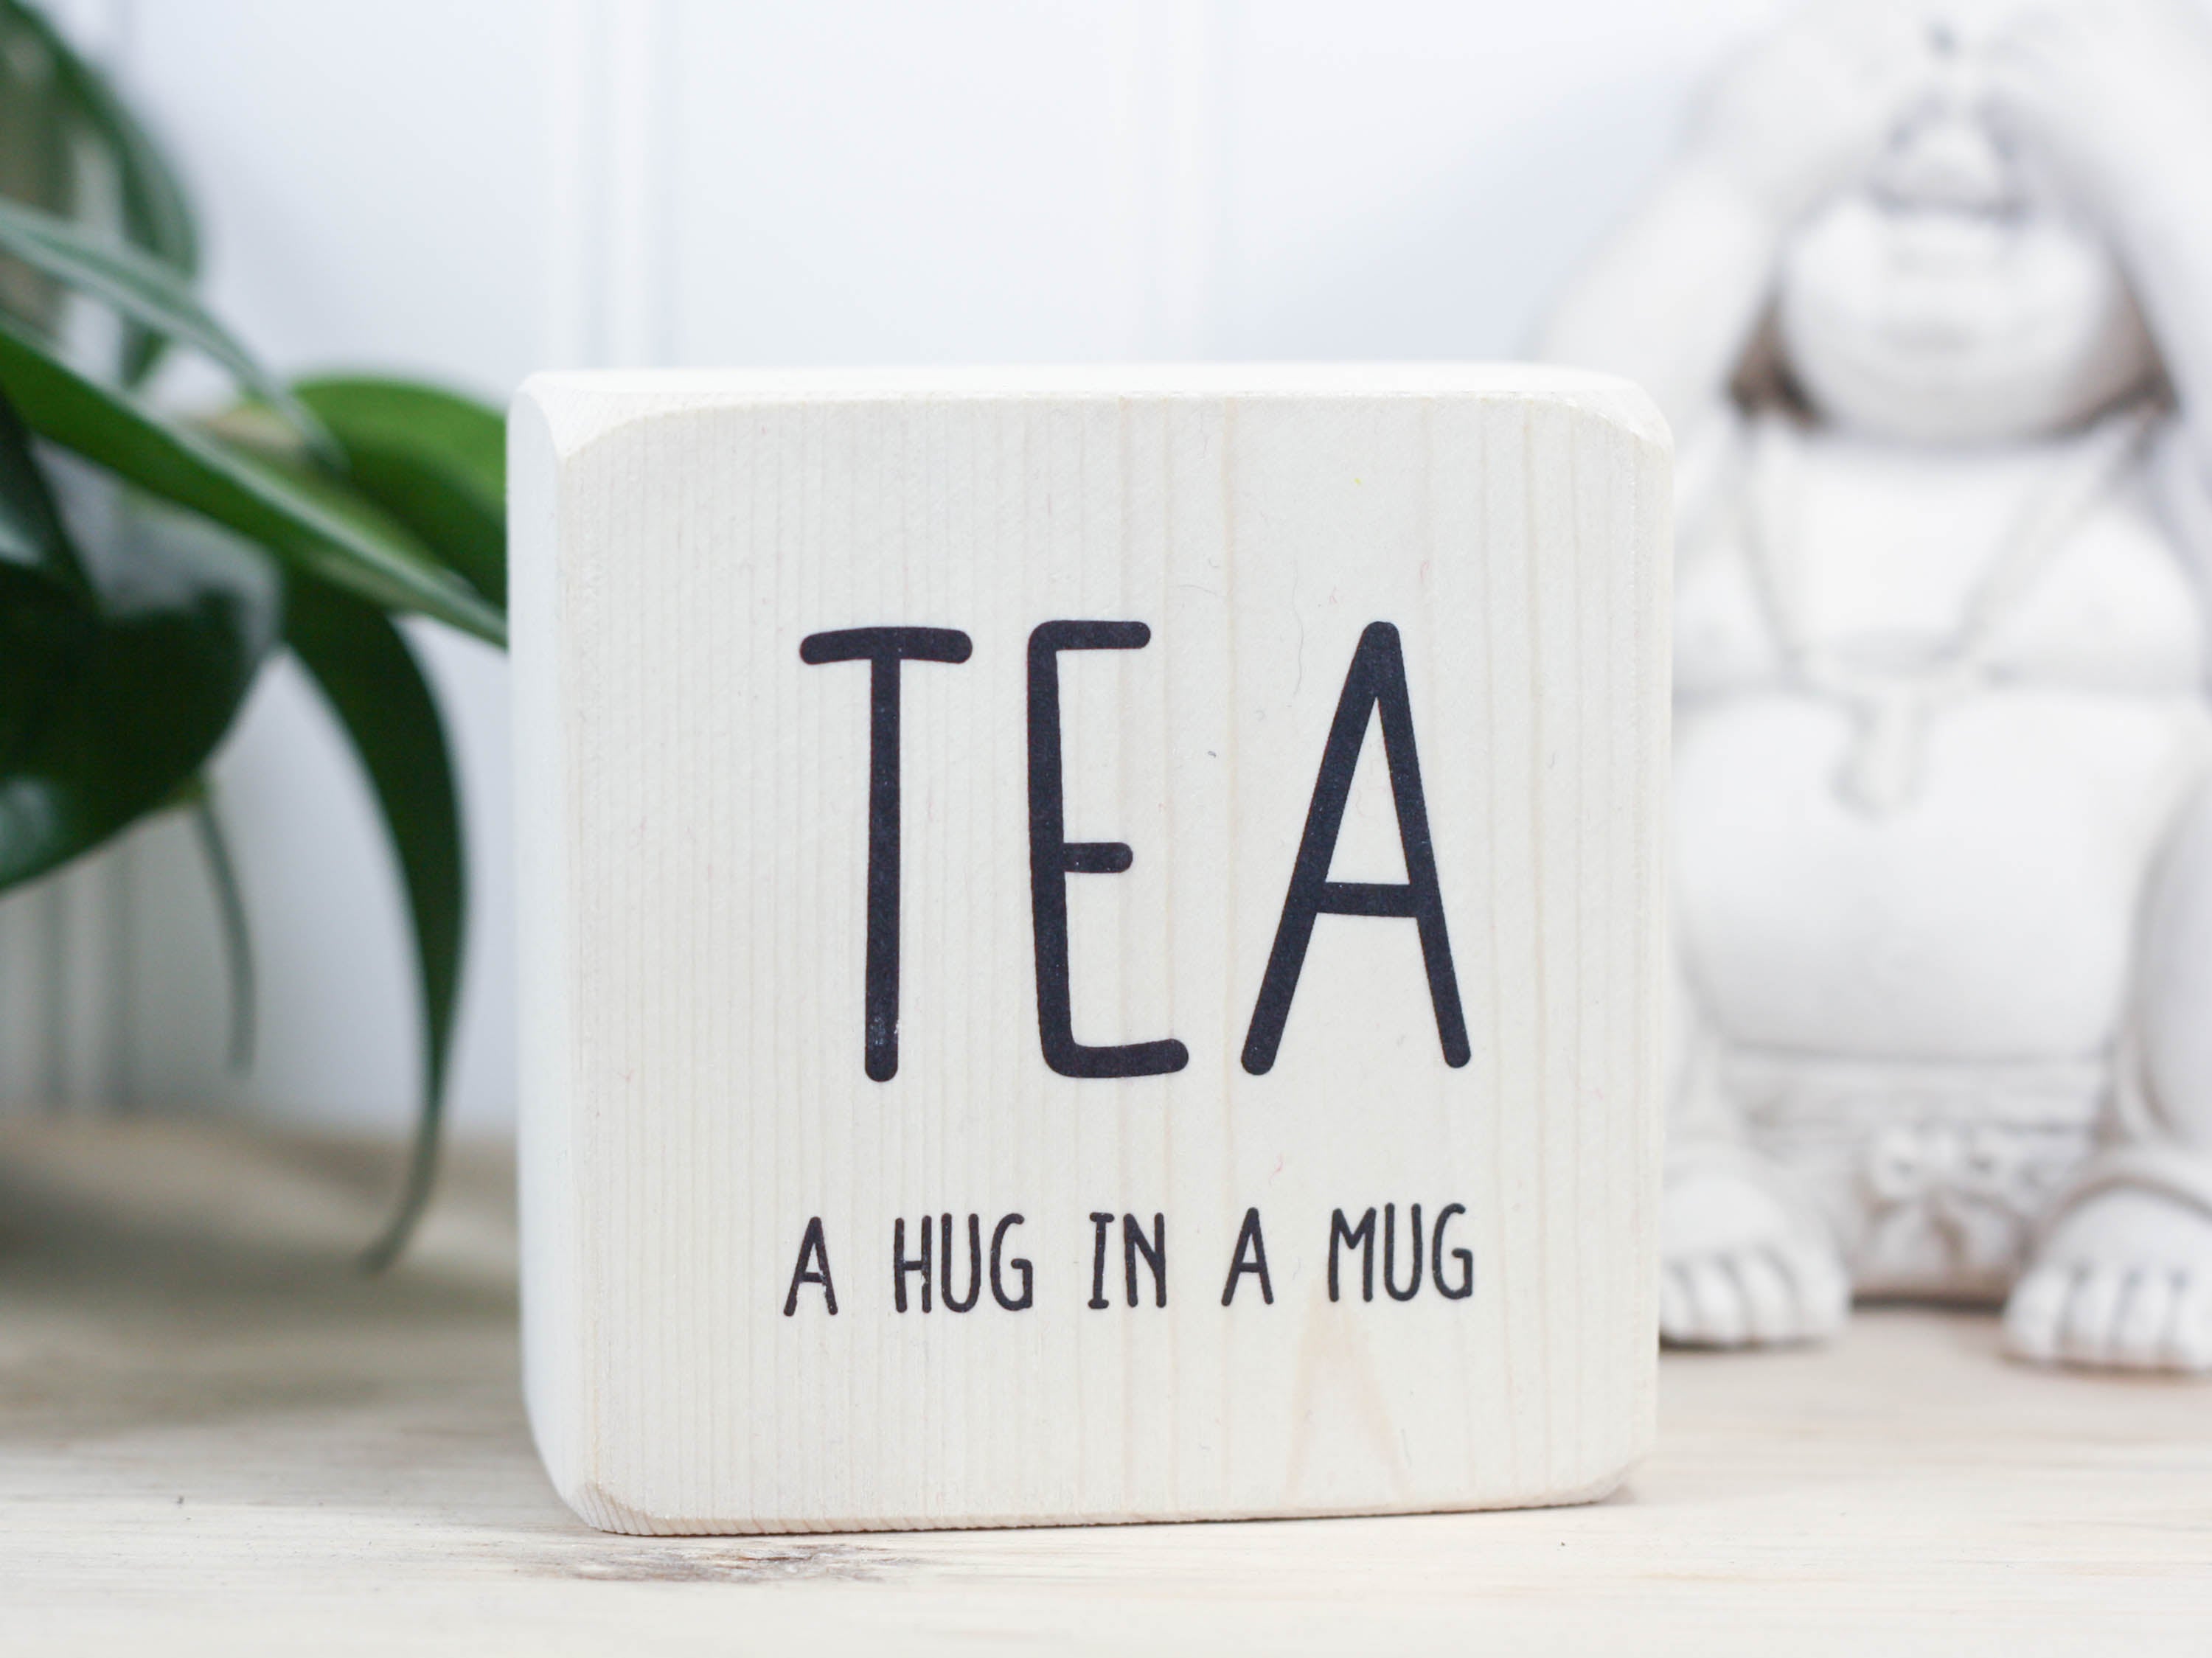 Mini wood sign in whitewash with the saying "TEA a hug in a mug".